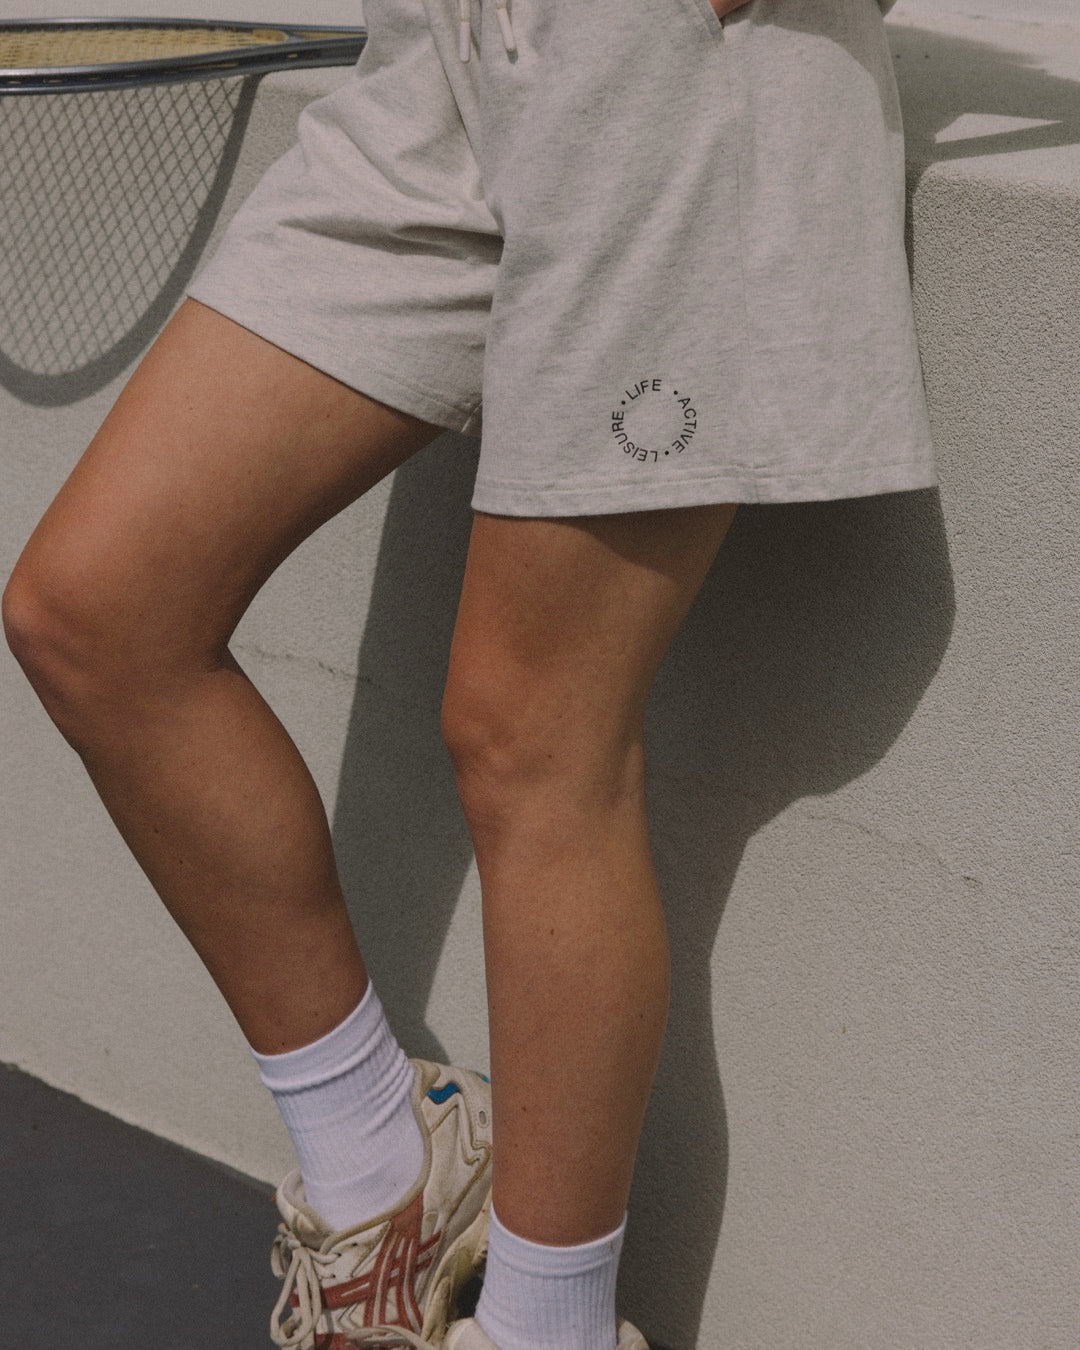 Sport Short - Grey Marle Shorts by Pinky & Kamal - Prae Store